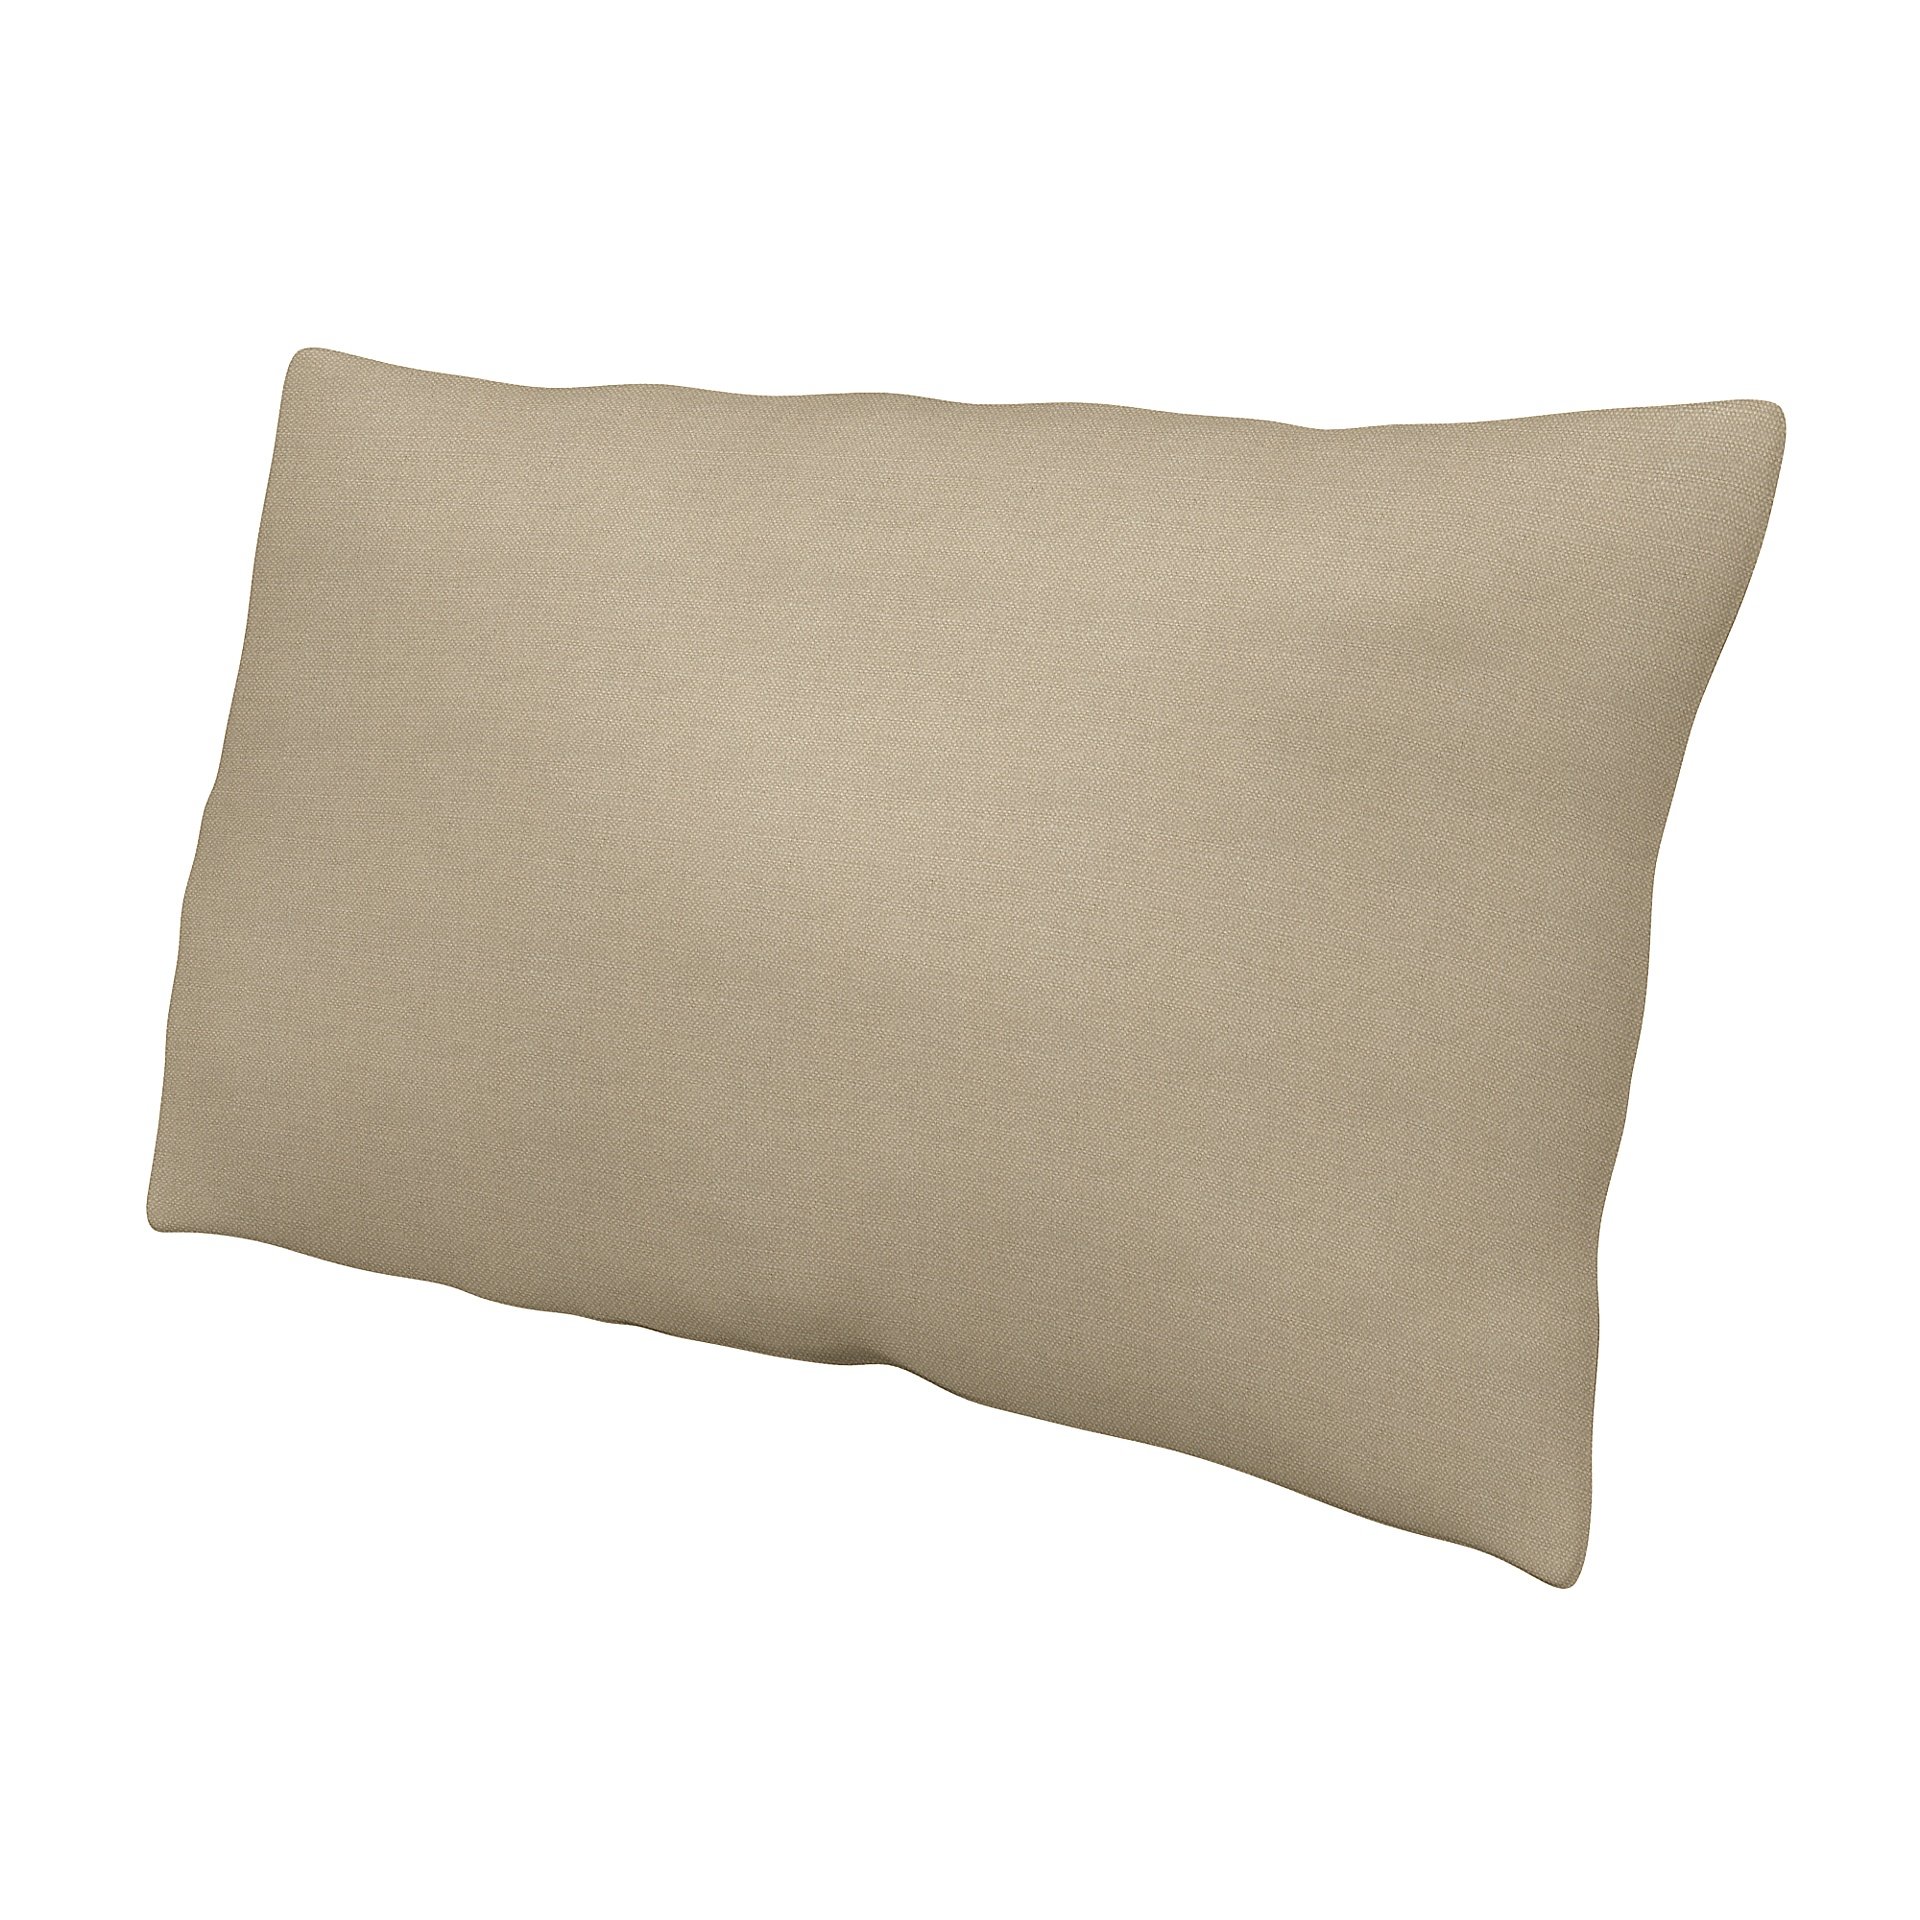 IKEA - Cushion Cover Ektorp 40x70 cm, Tan, Linen - Bemz